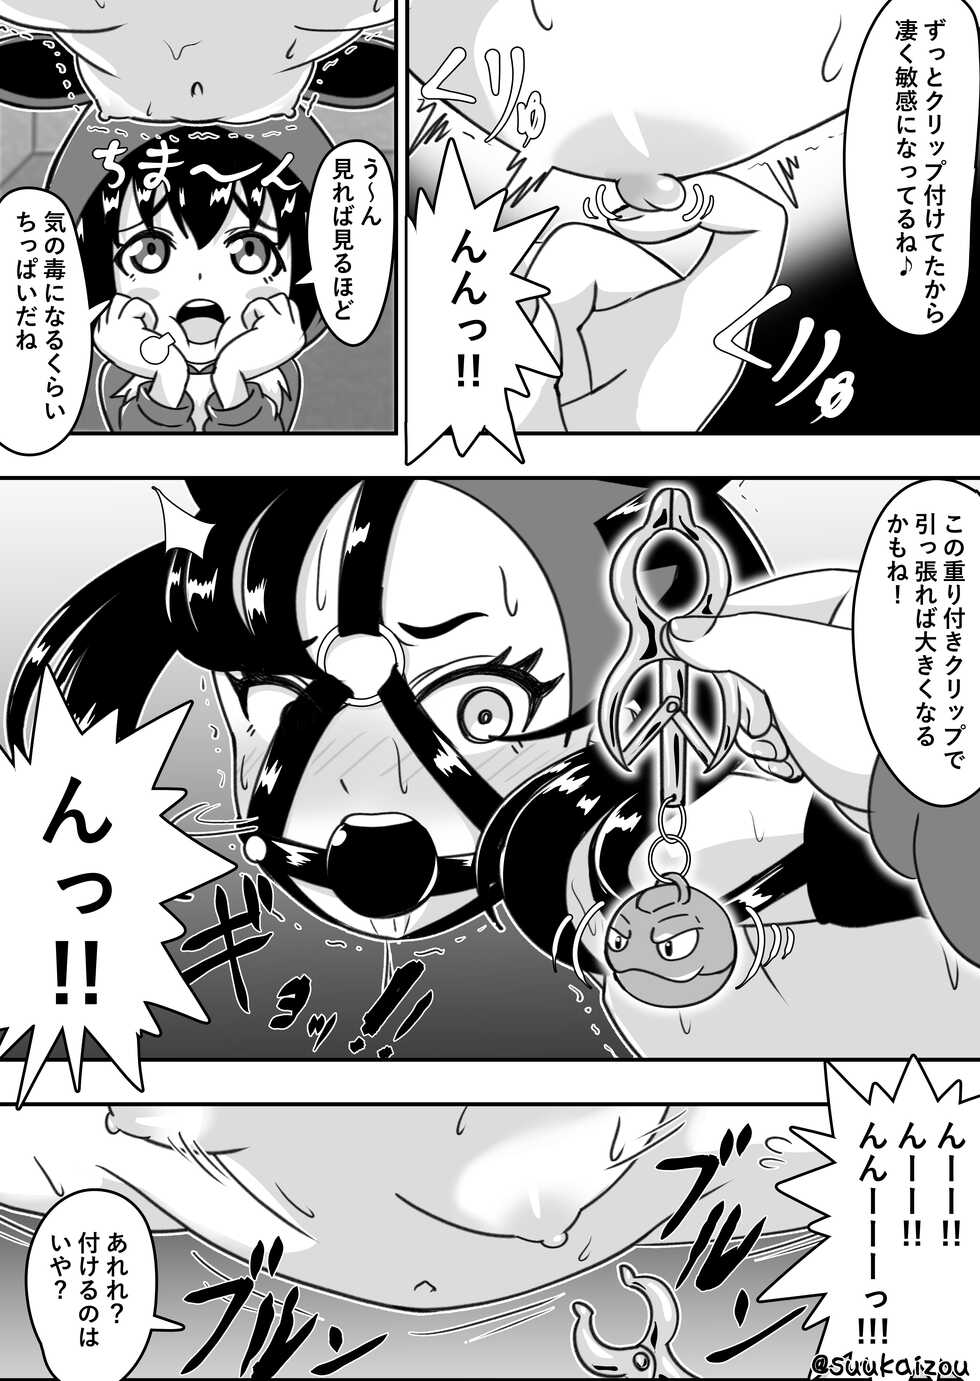 [suukaizou] Marie-chan punishment started [ENG & JAP] - Page 15